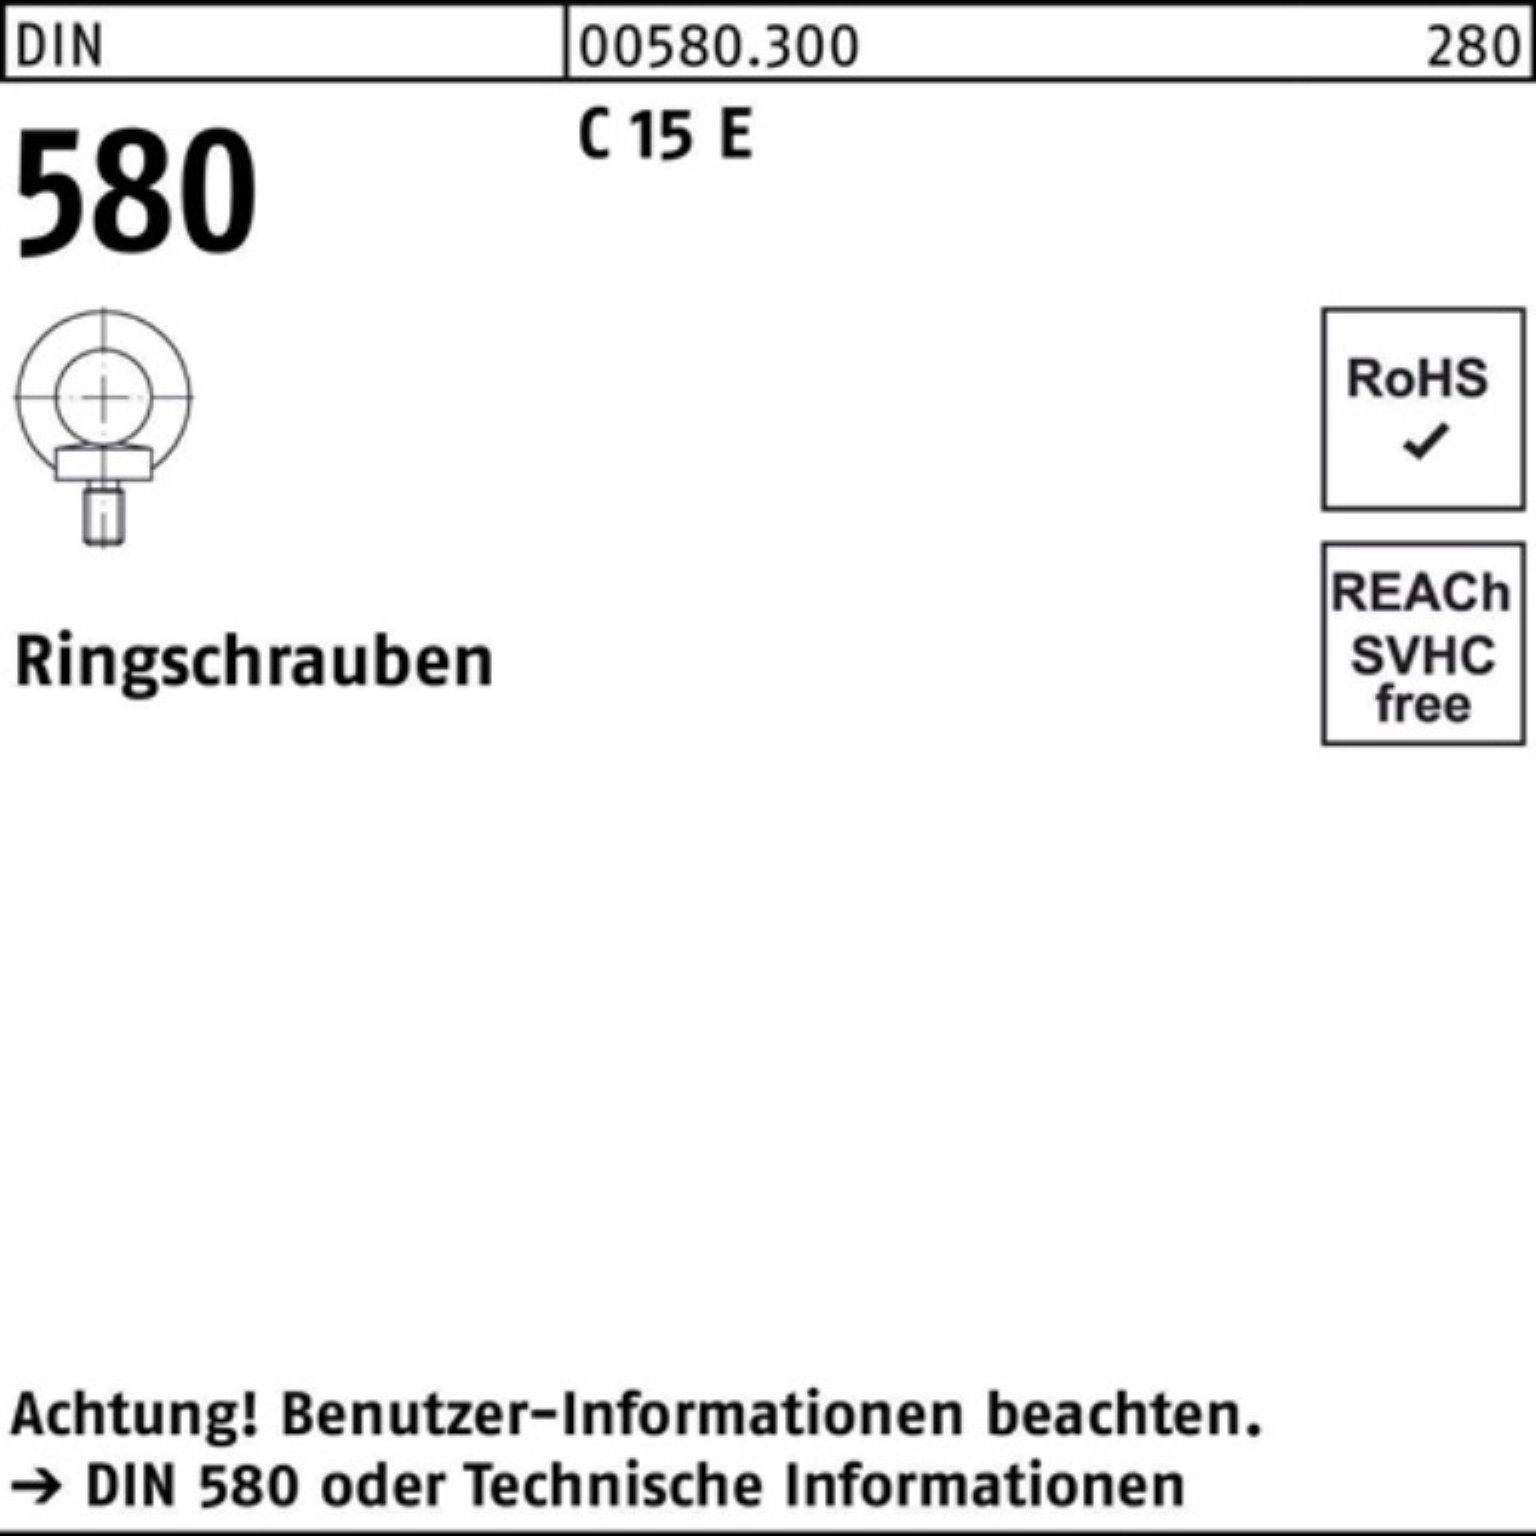 Reyher Schraube 100er Pack 580 DIN E 580 DIN M12 C 10 15 E Ringschraube Ri 15 C Stück